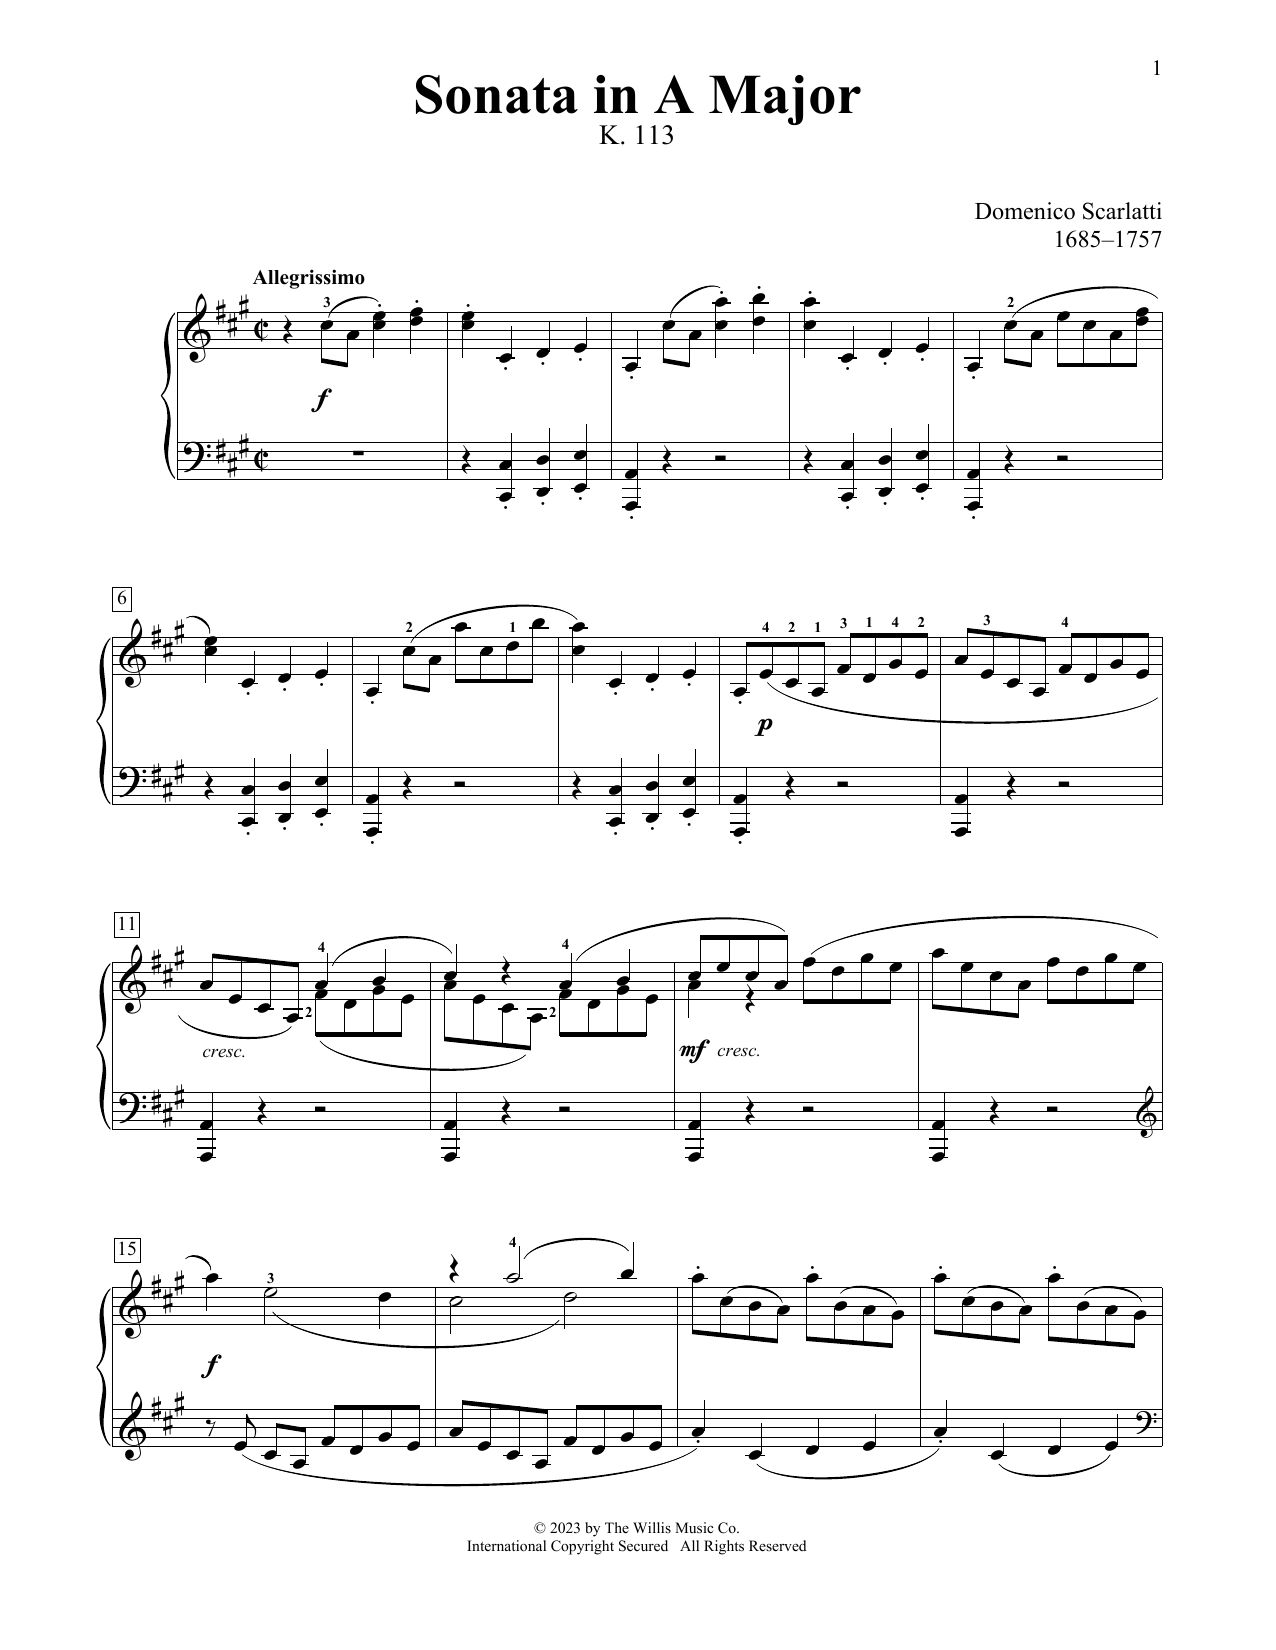 Domenico Scarlatti Sonata In A Major, K. 113 sheet music notes and chords arranged for Educational Piano